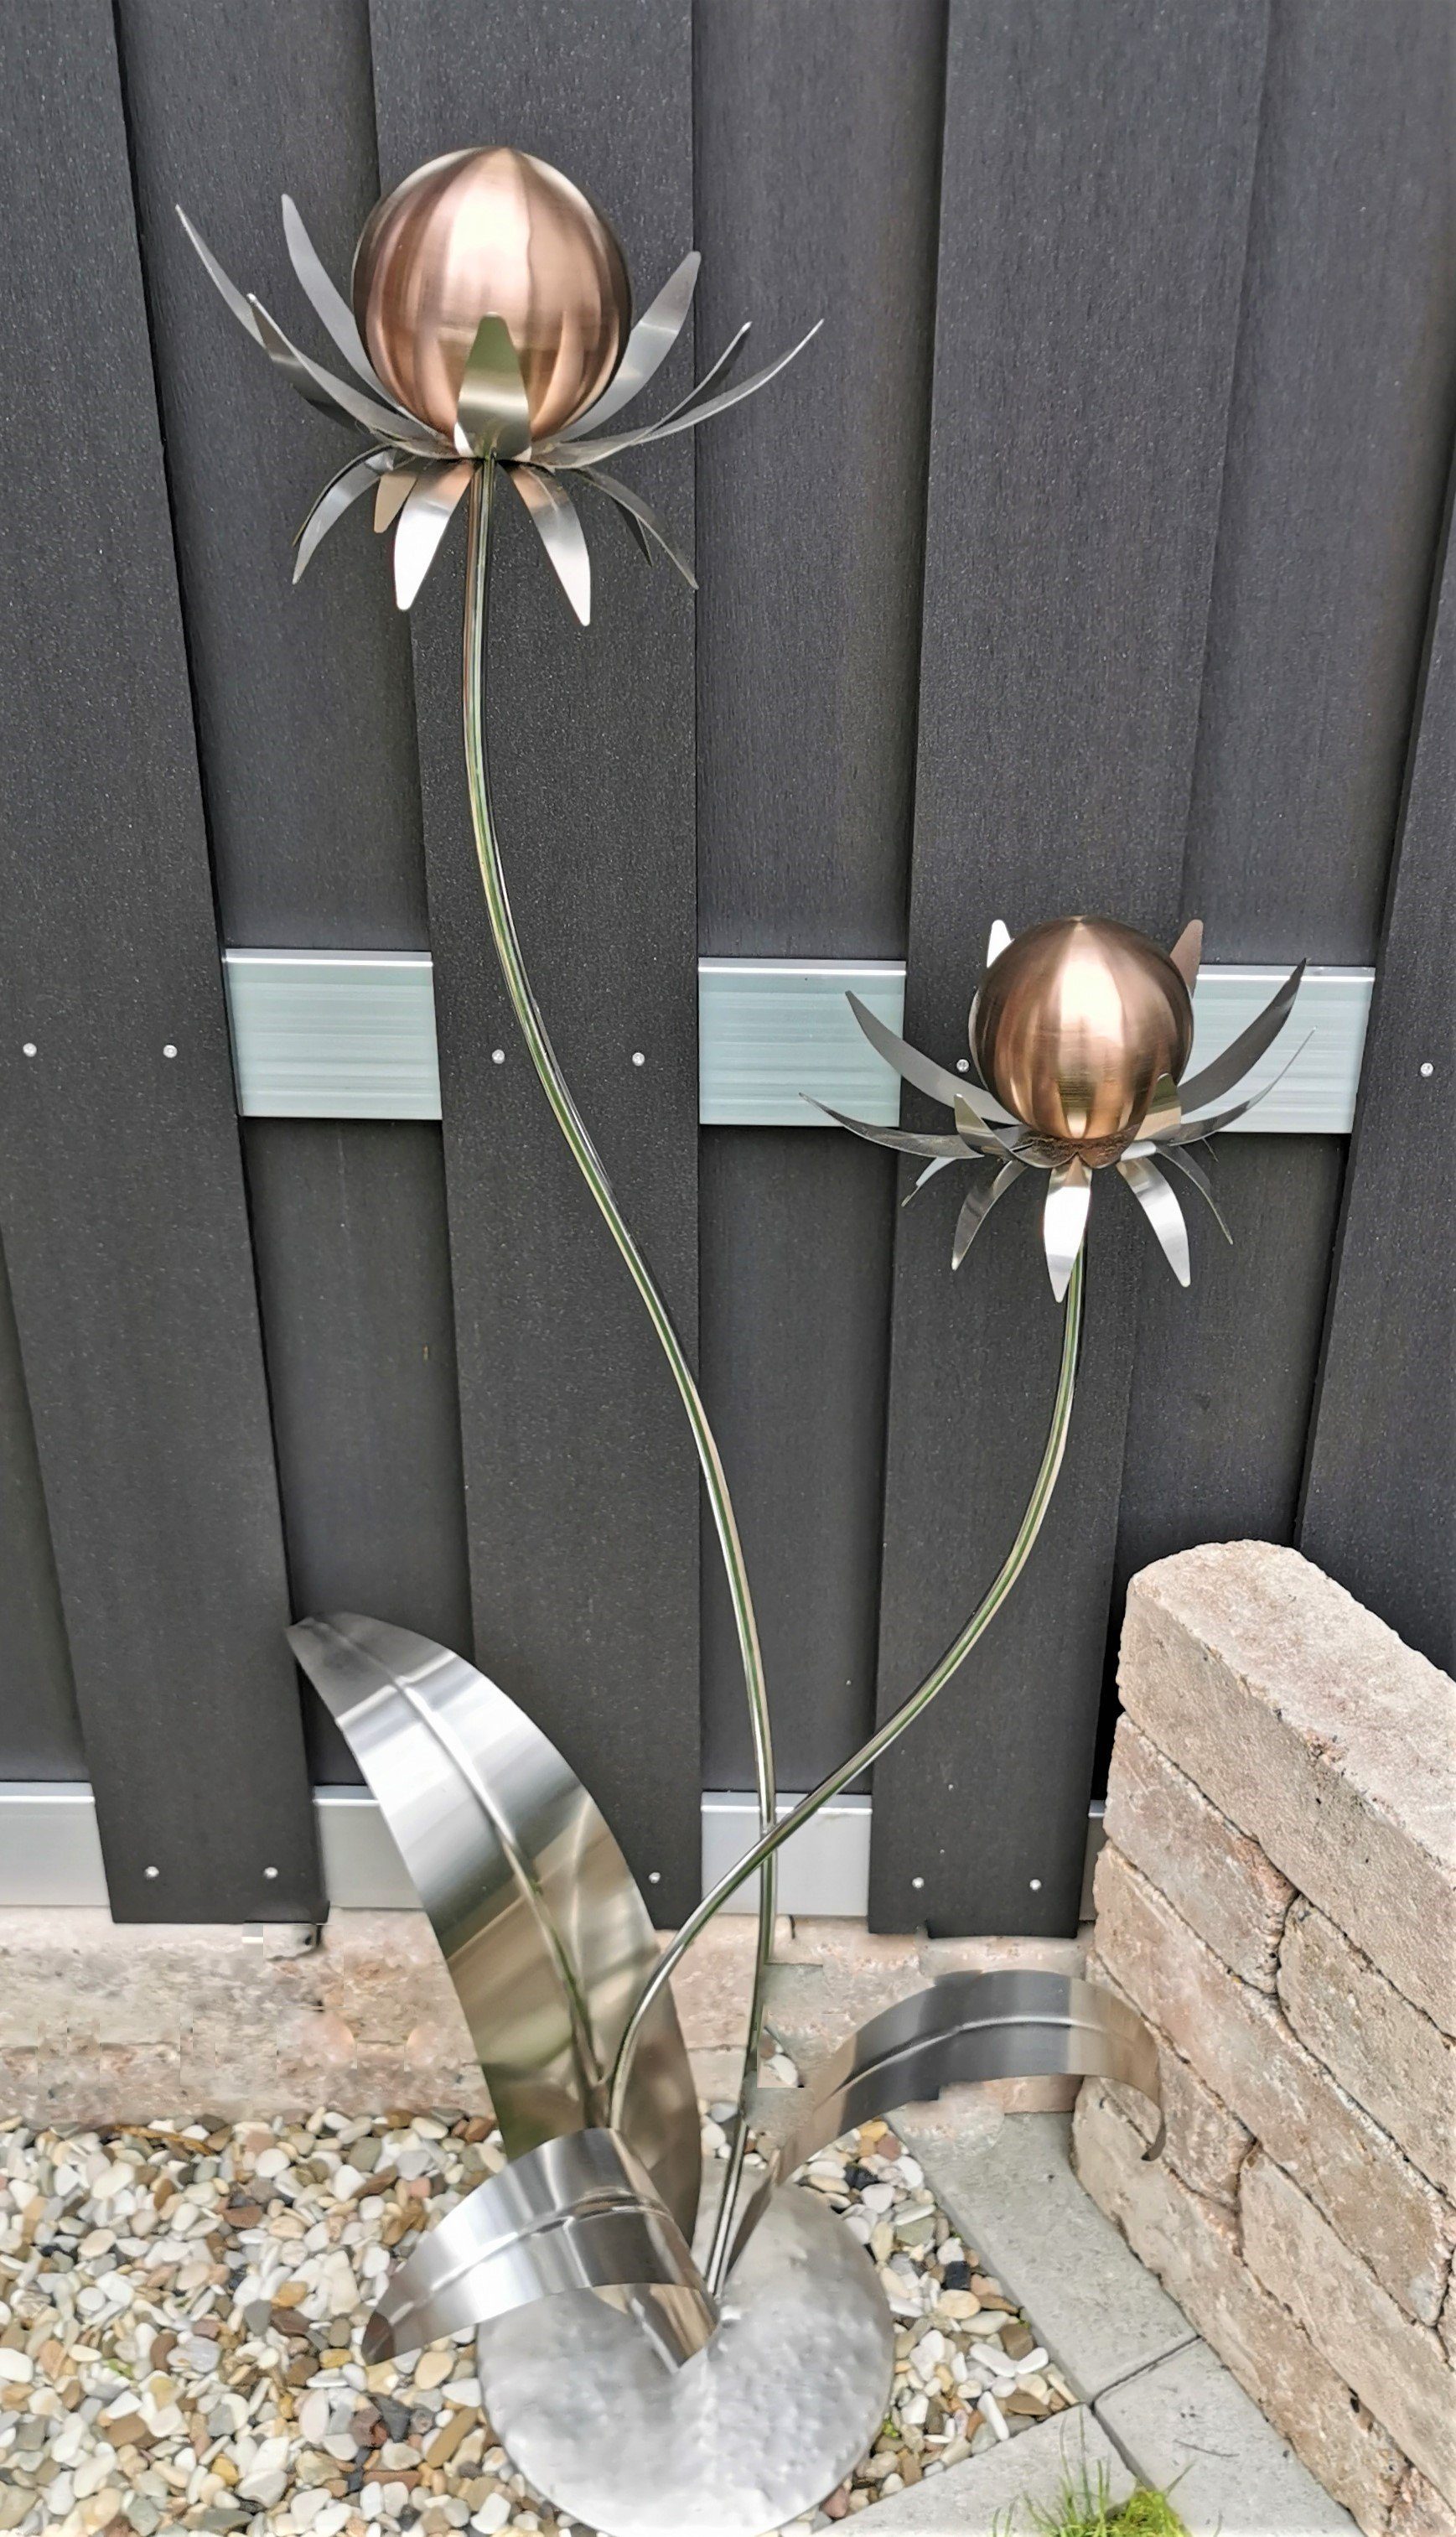 Jürgen Bocker Garten-Ambiente Gartenstecker Skulptur Blume Milano Edelstahl 120 cm Kugel Edelstahl golden rose matt gebürstet Standfuß Garten